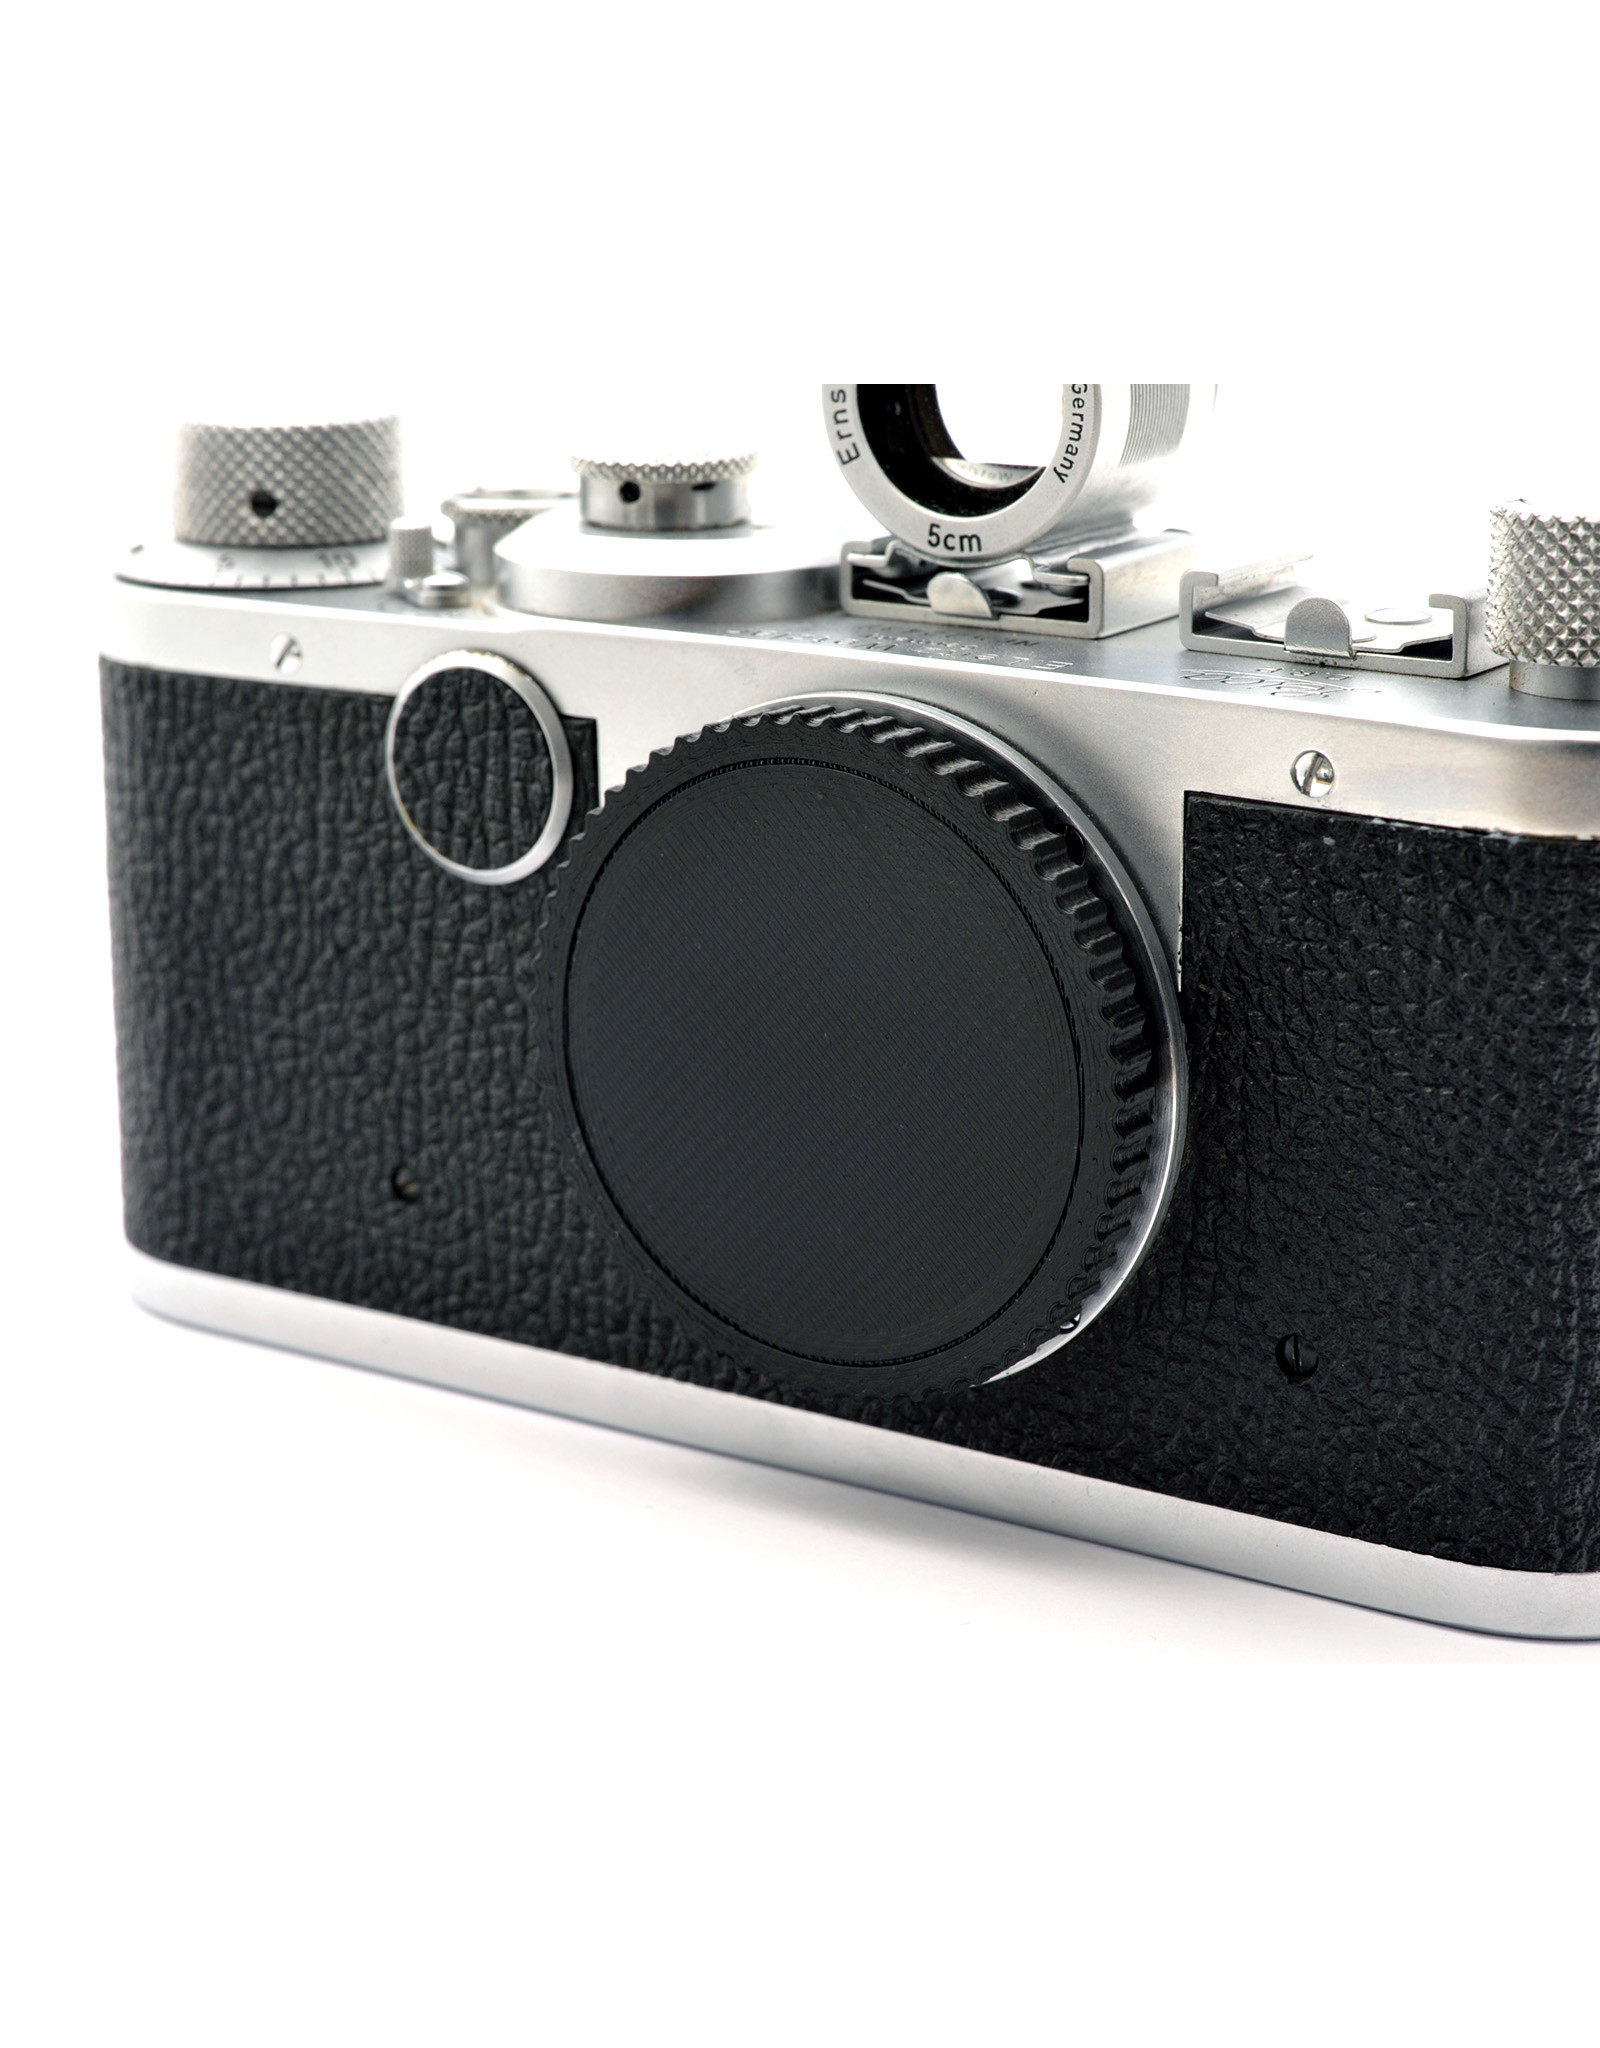 Aperture Aperture Cap - L39 body cap (fits Leica screw mount cameras / 3D printed in black finish)   L39BCBLK